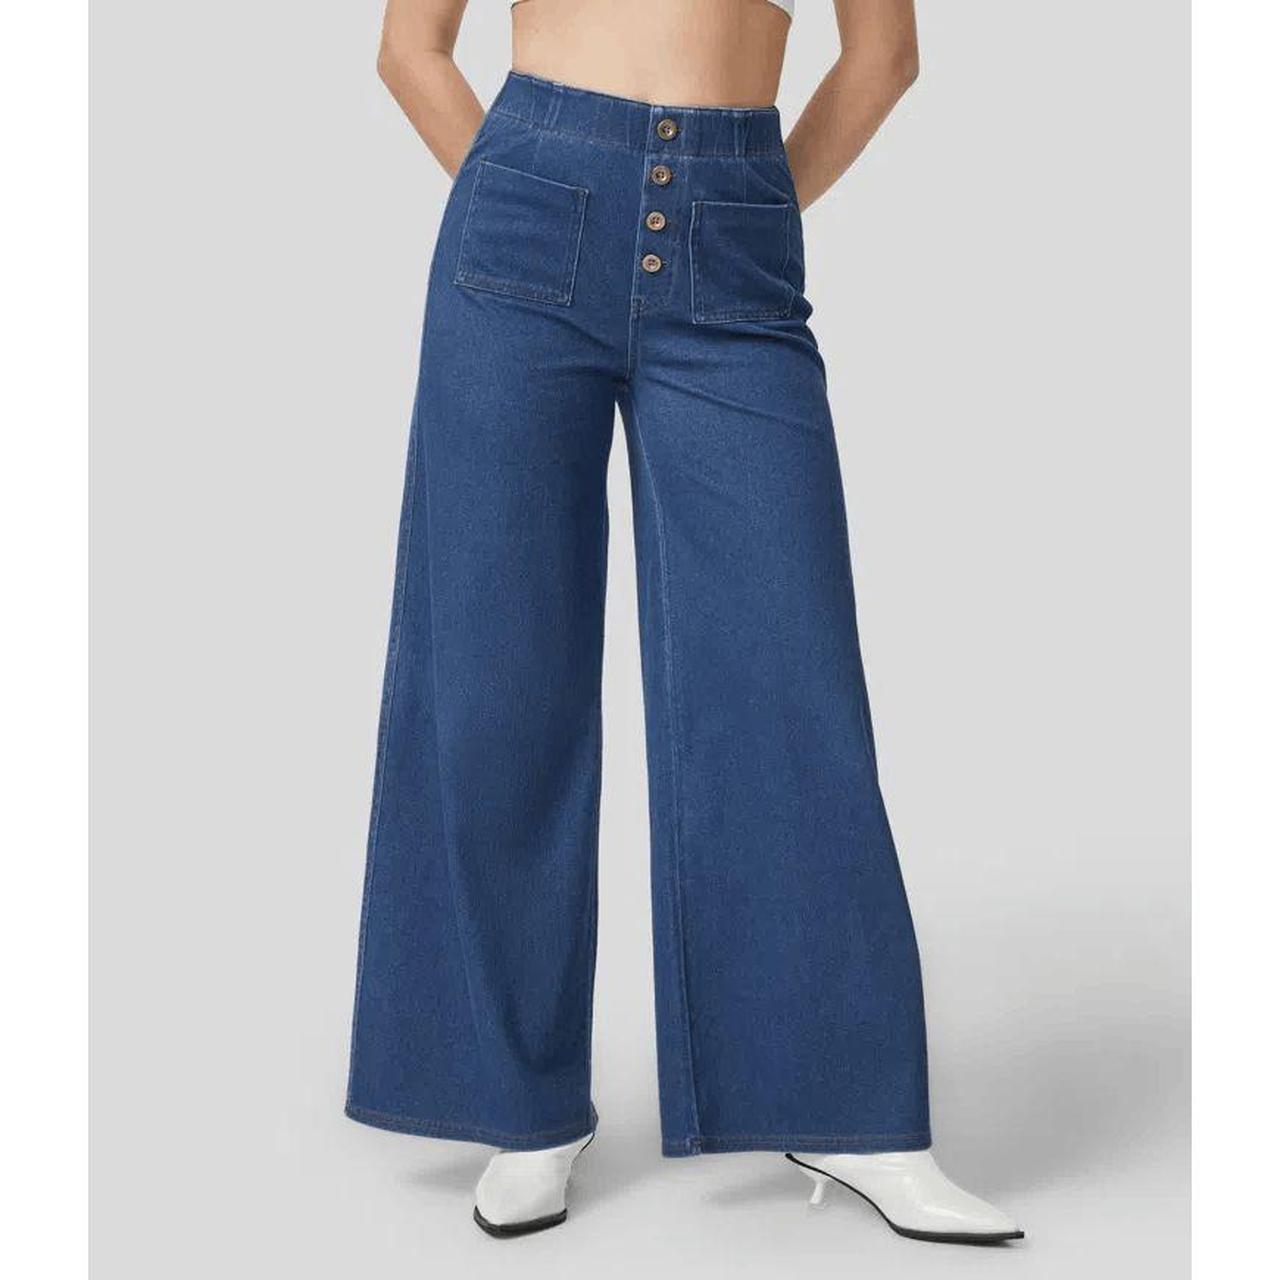 Halara Magic High Waisted Jeans Front Pockets - Depop